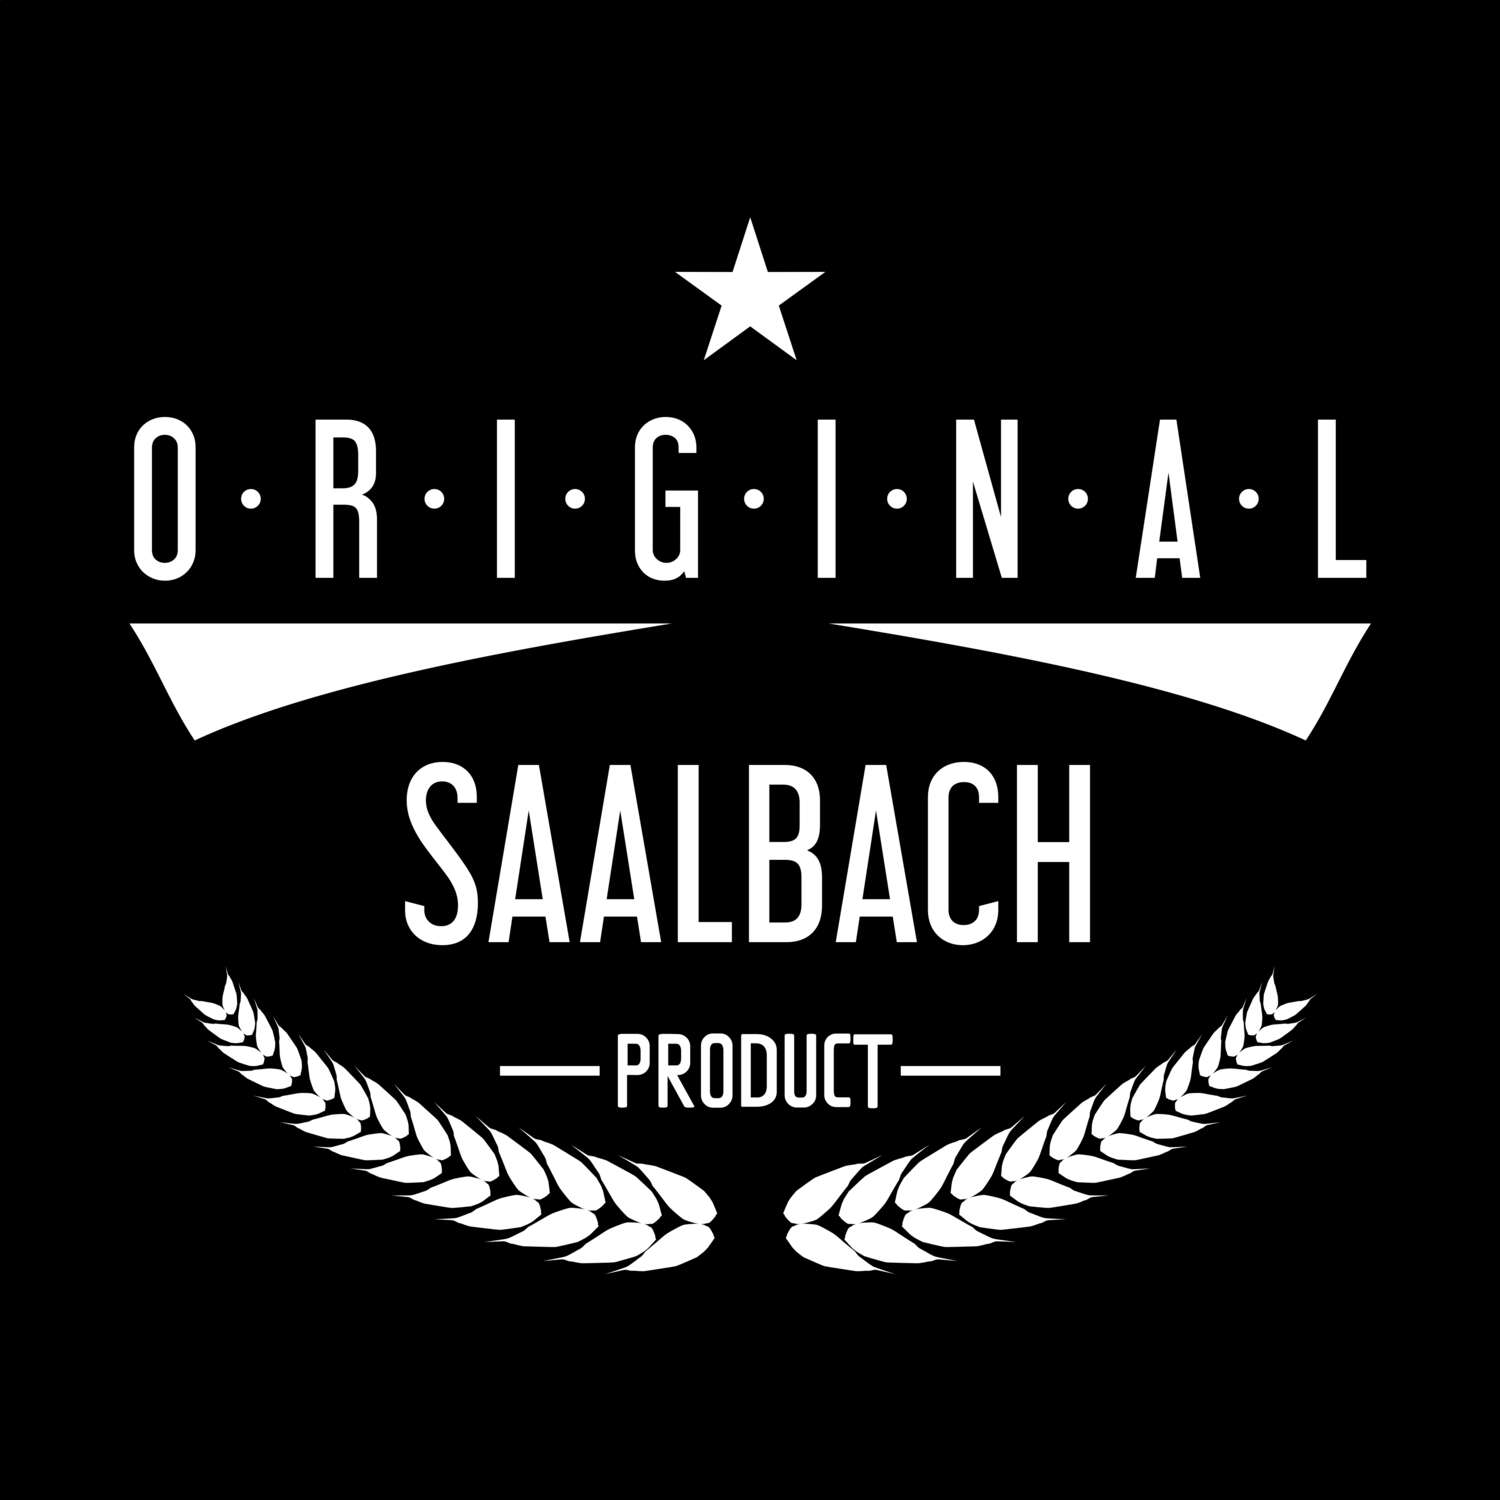 Saalbach T-Shirt »Original Product«